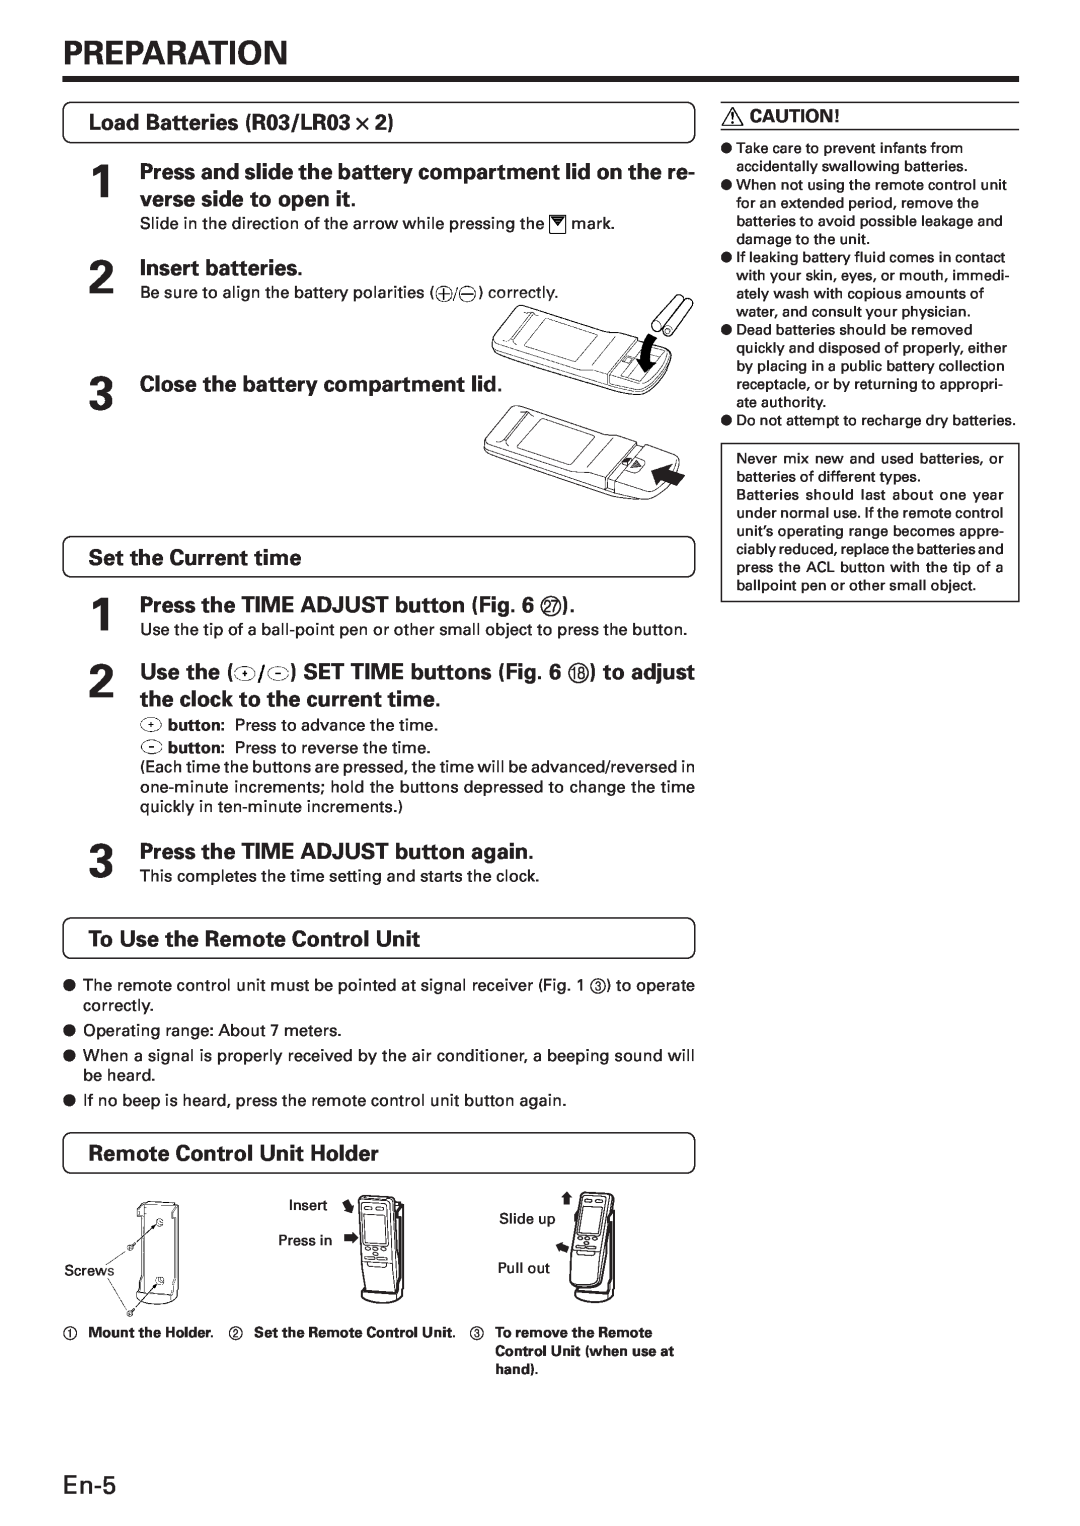 Fujitsu AWU36CX manual Preparation, En-5, Load Batteries R03/LR03 ⋅, verse side to open it, Insert batteries, Use the 